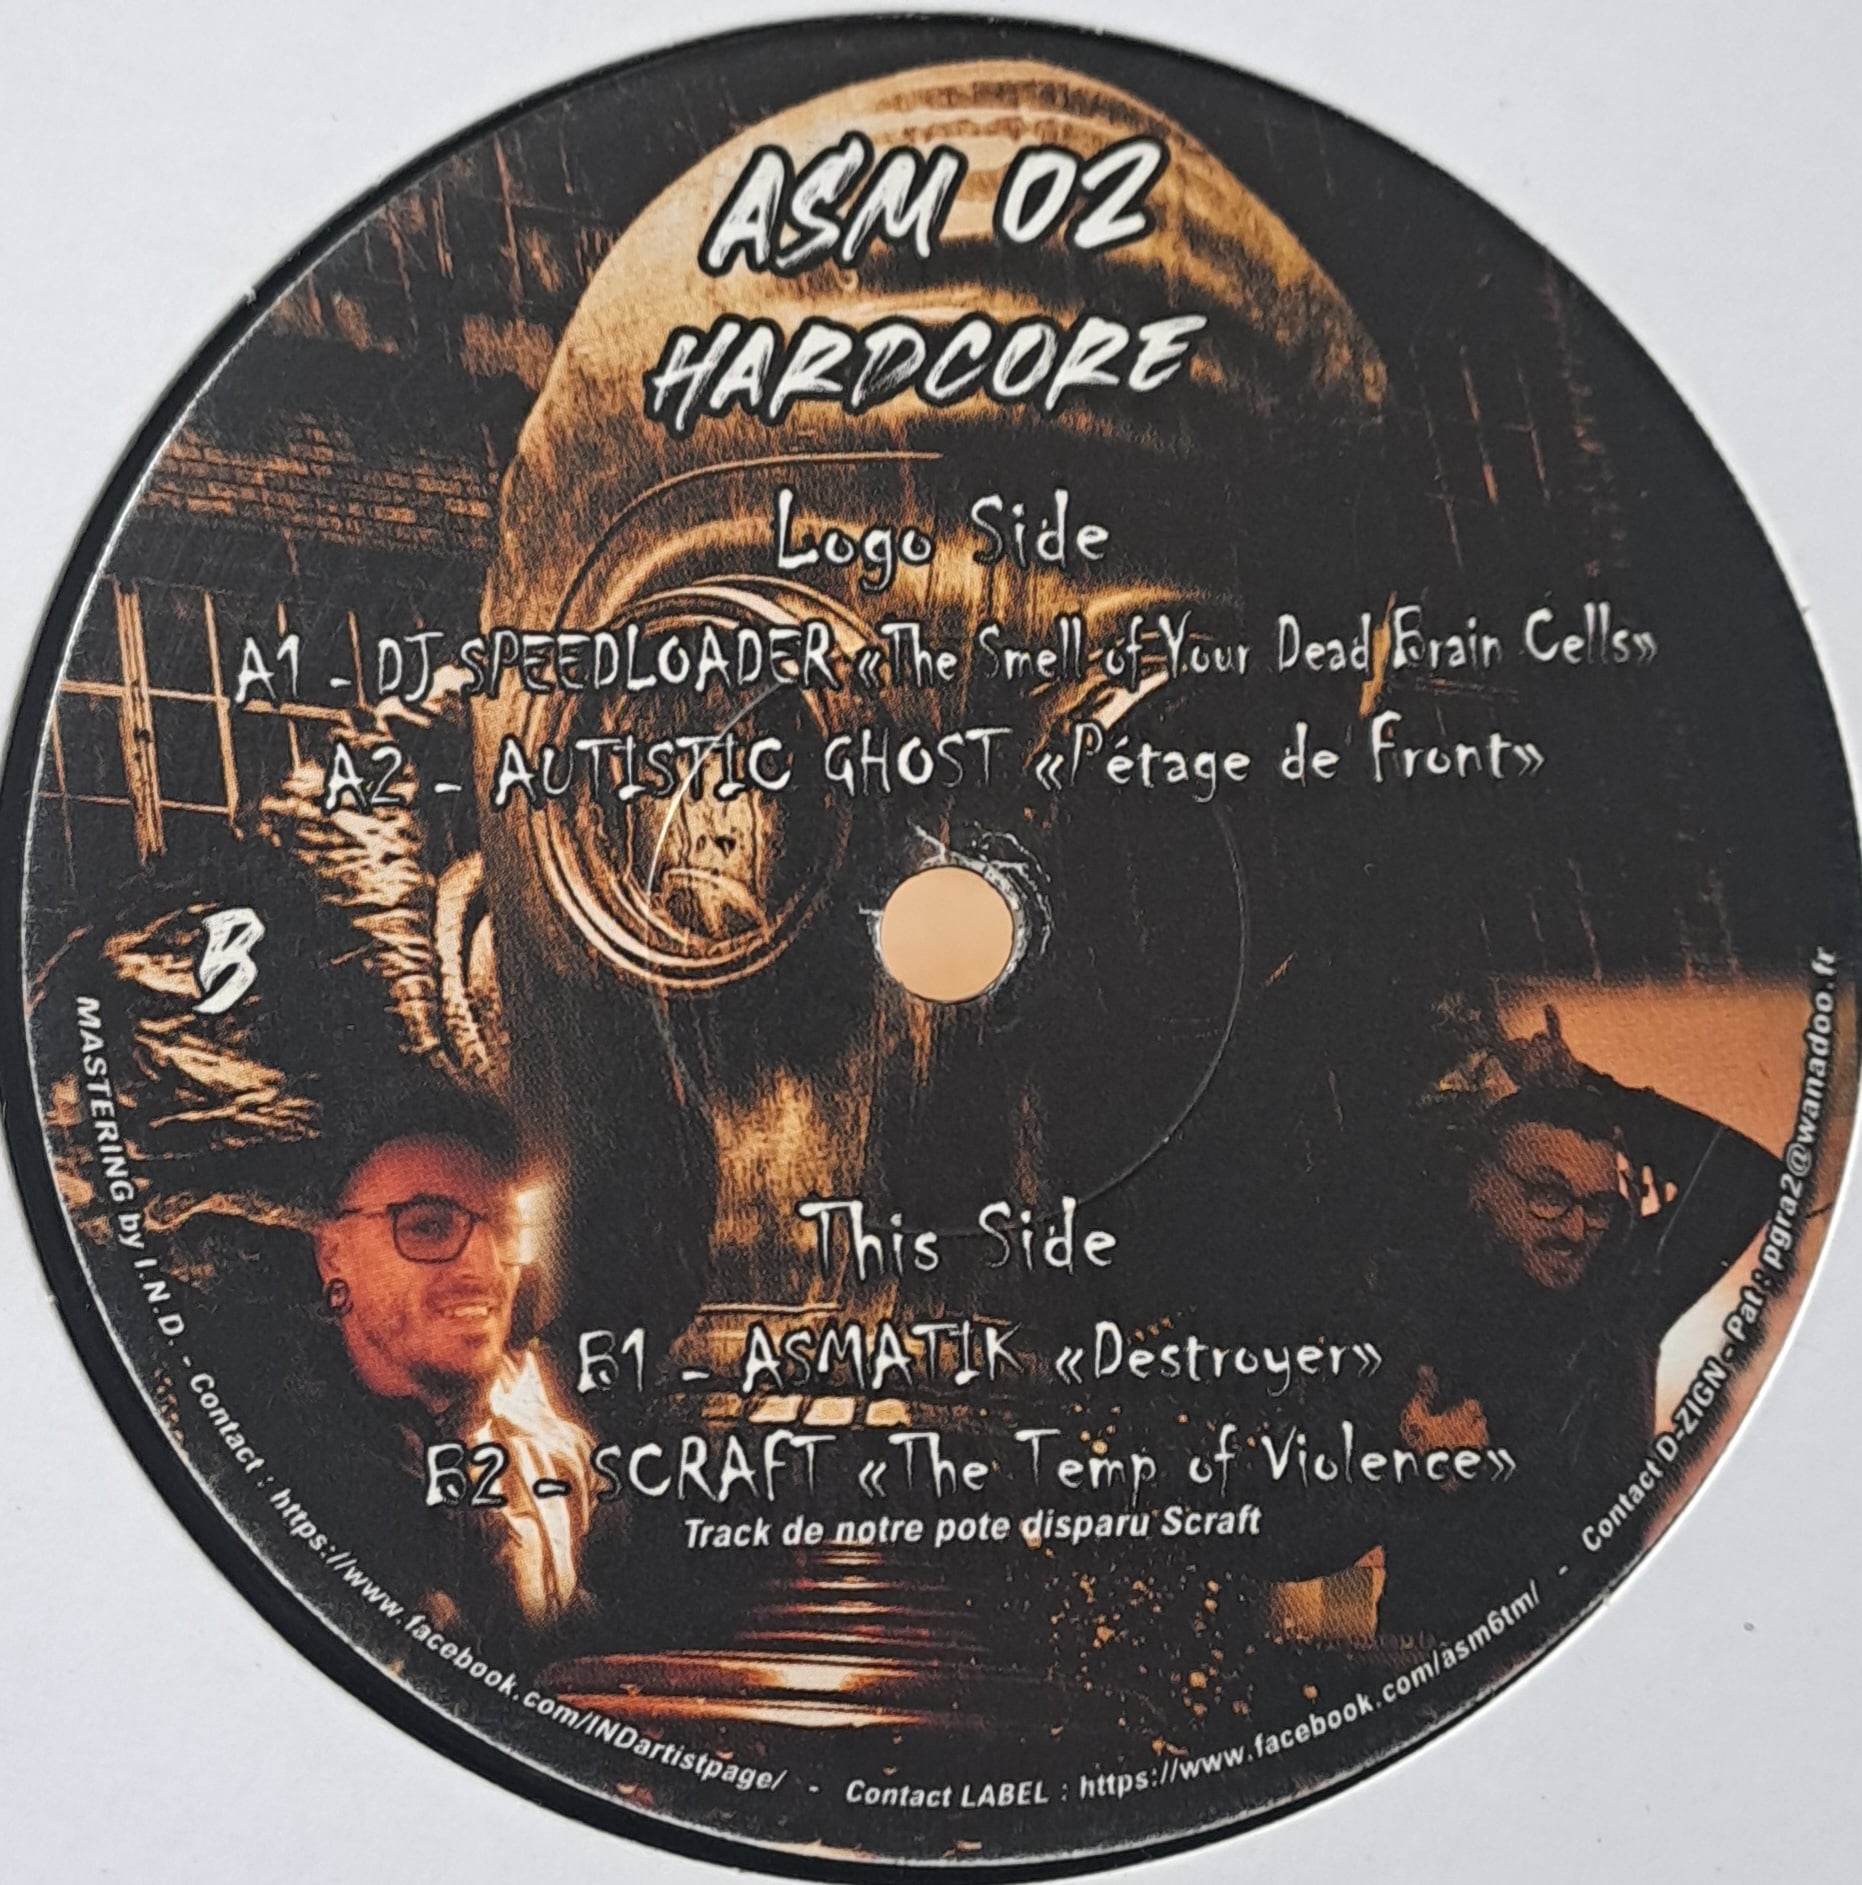 ASM 002 - vinyle hardcore